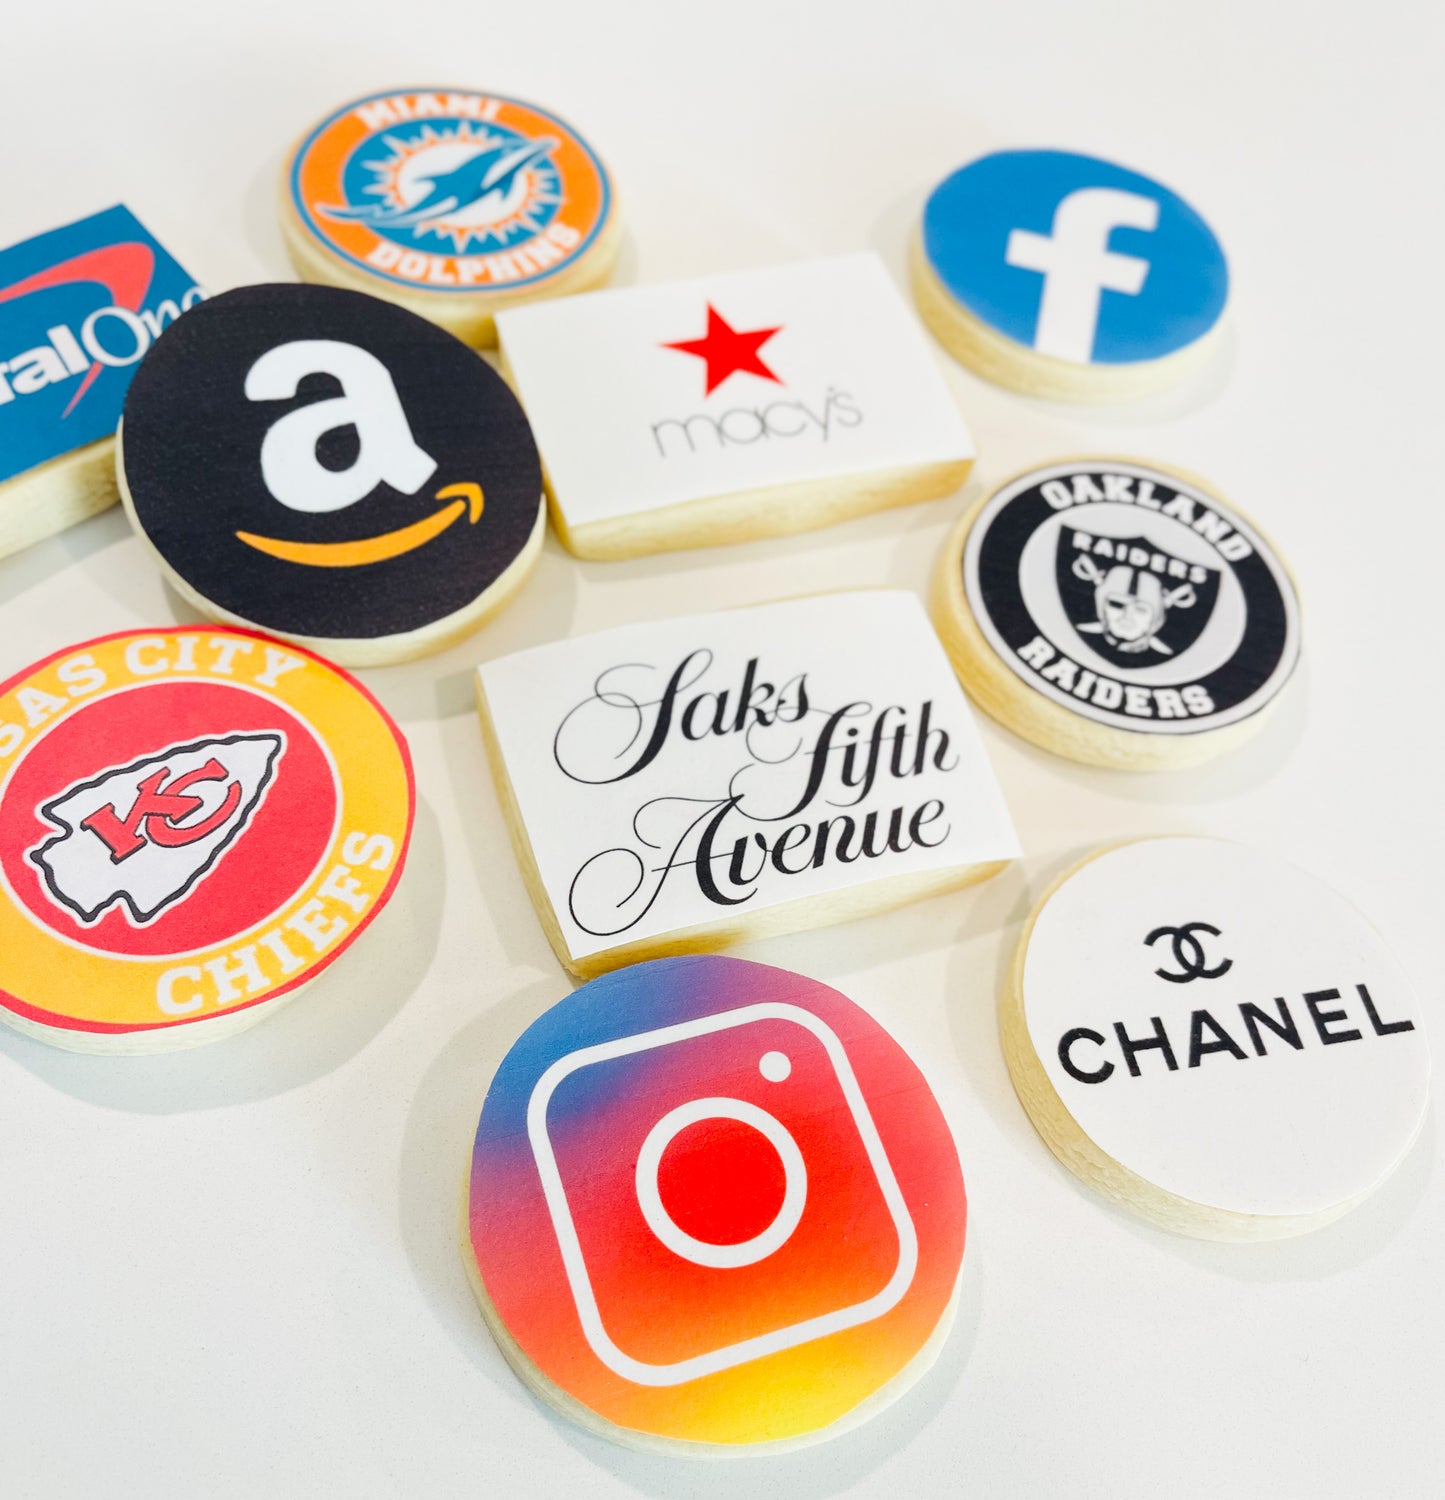 Logo cookies, christmas corporate gift, photo cookies, logo on a cookies, logo sugar cookies